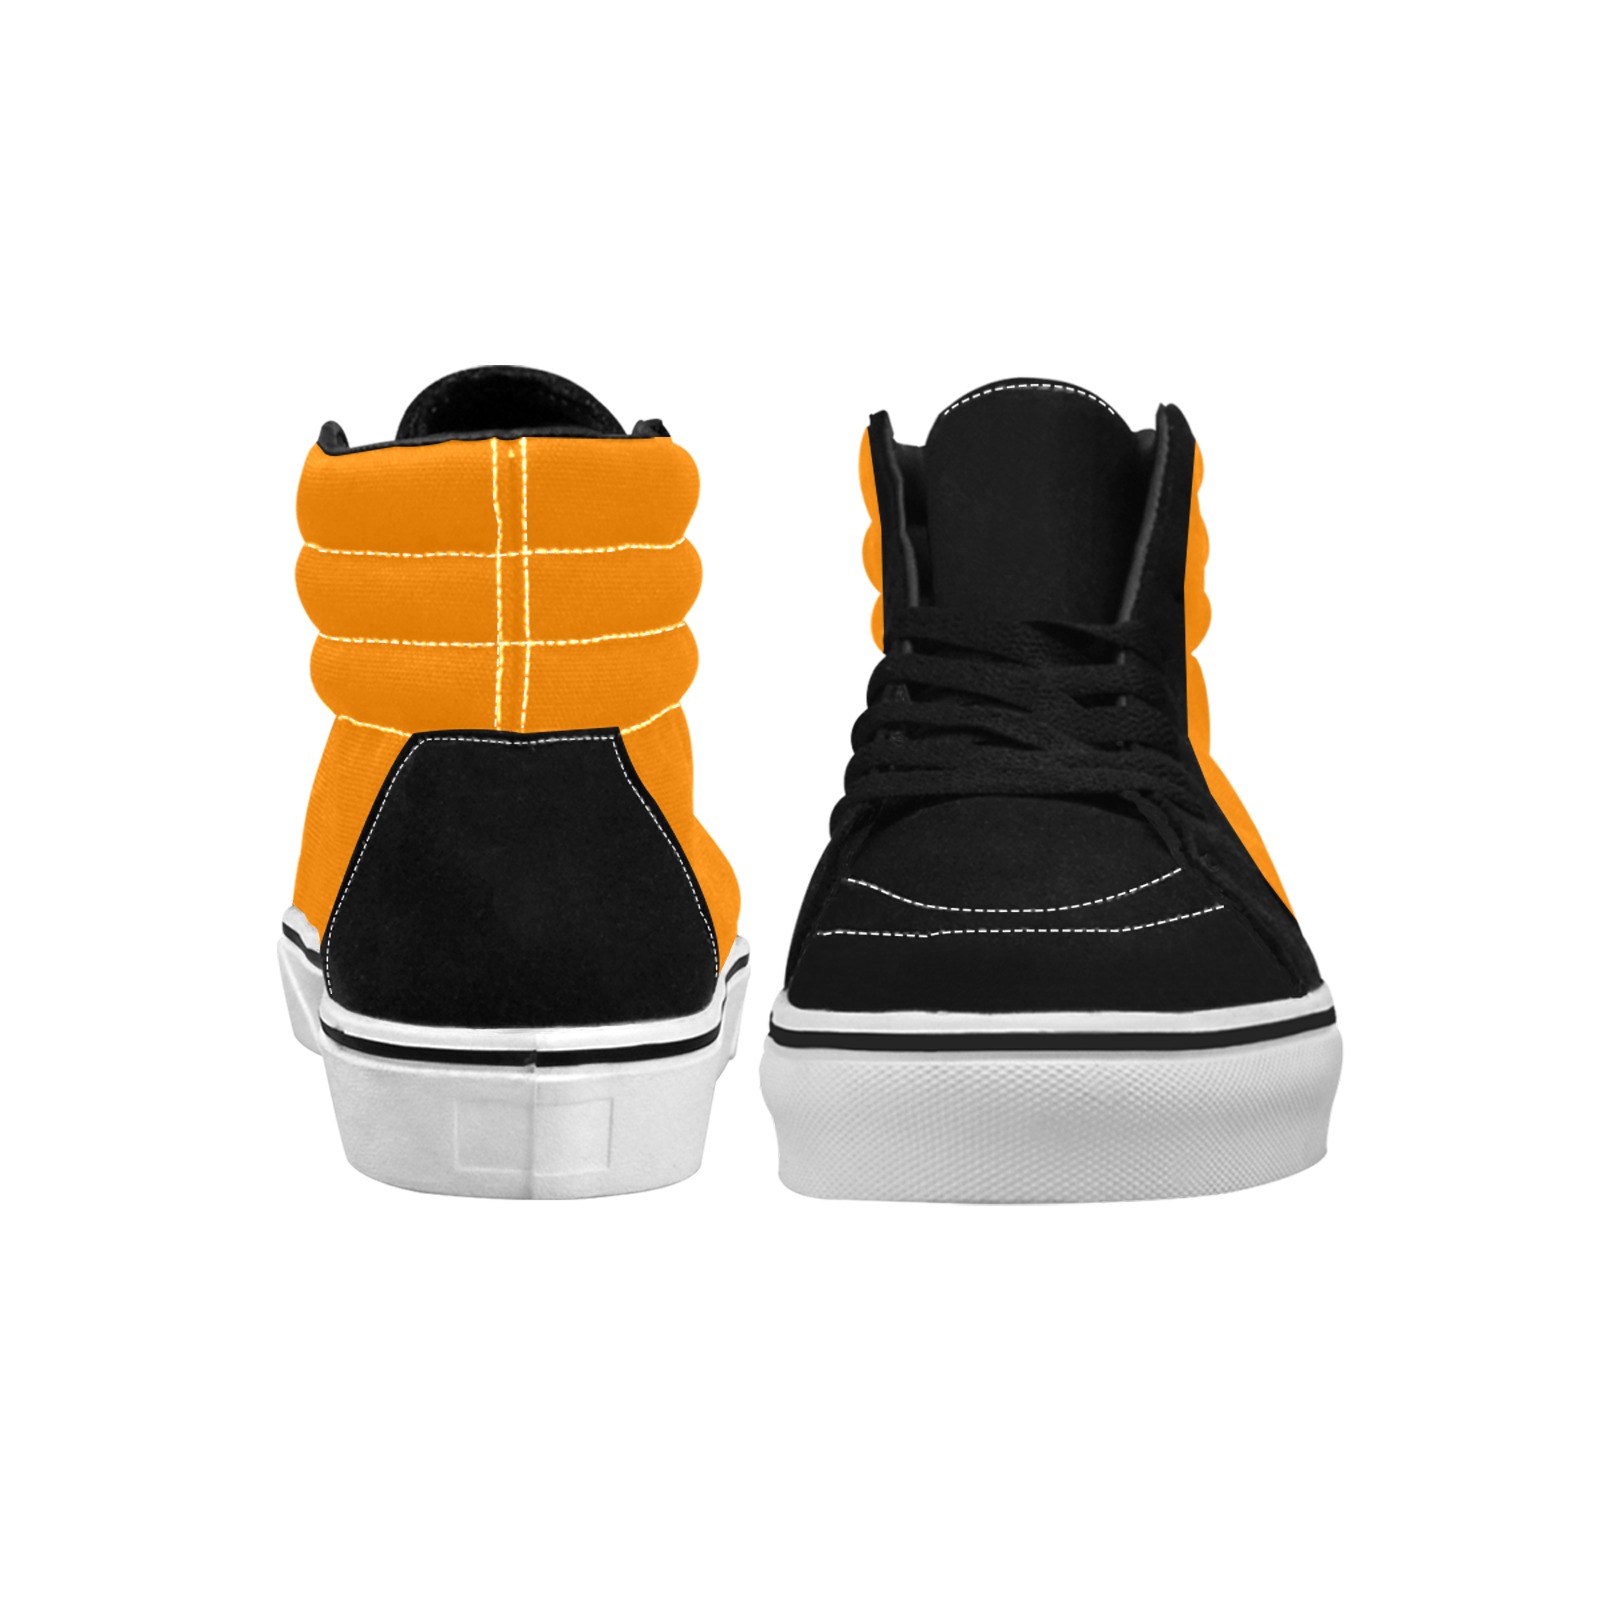 color dark orange Men's High Top Skateboarding Shoes (Model E001-1)